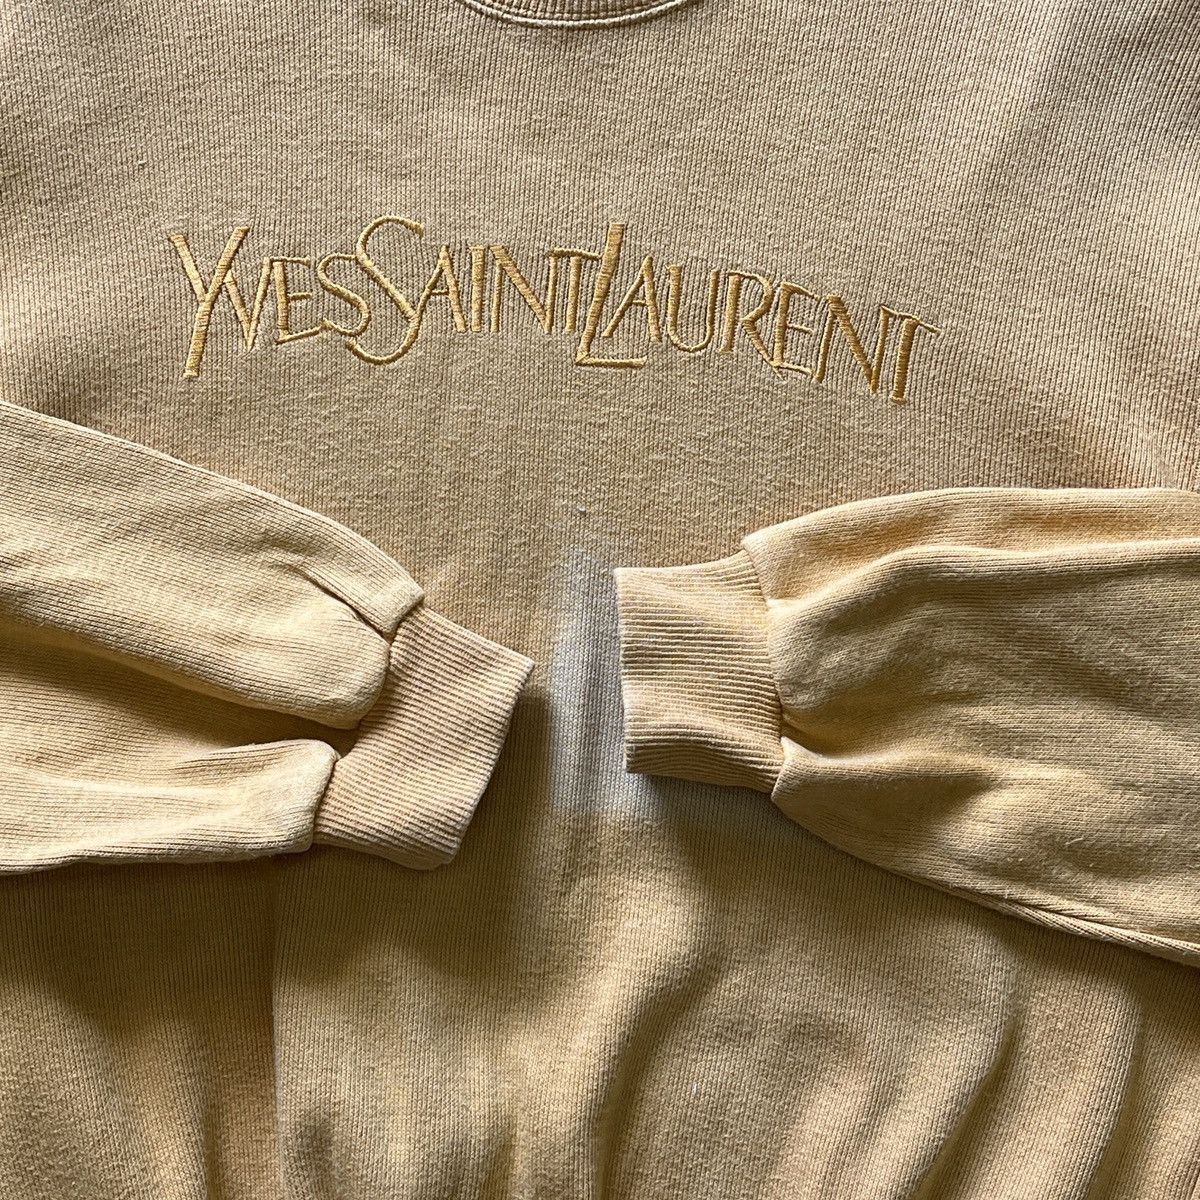 Sun Faded Vintage Yves Saint Laurent Sweater - 14